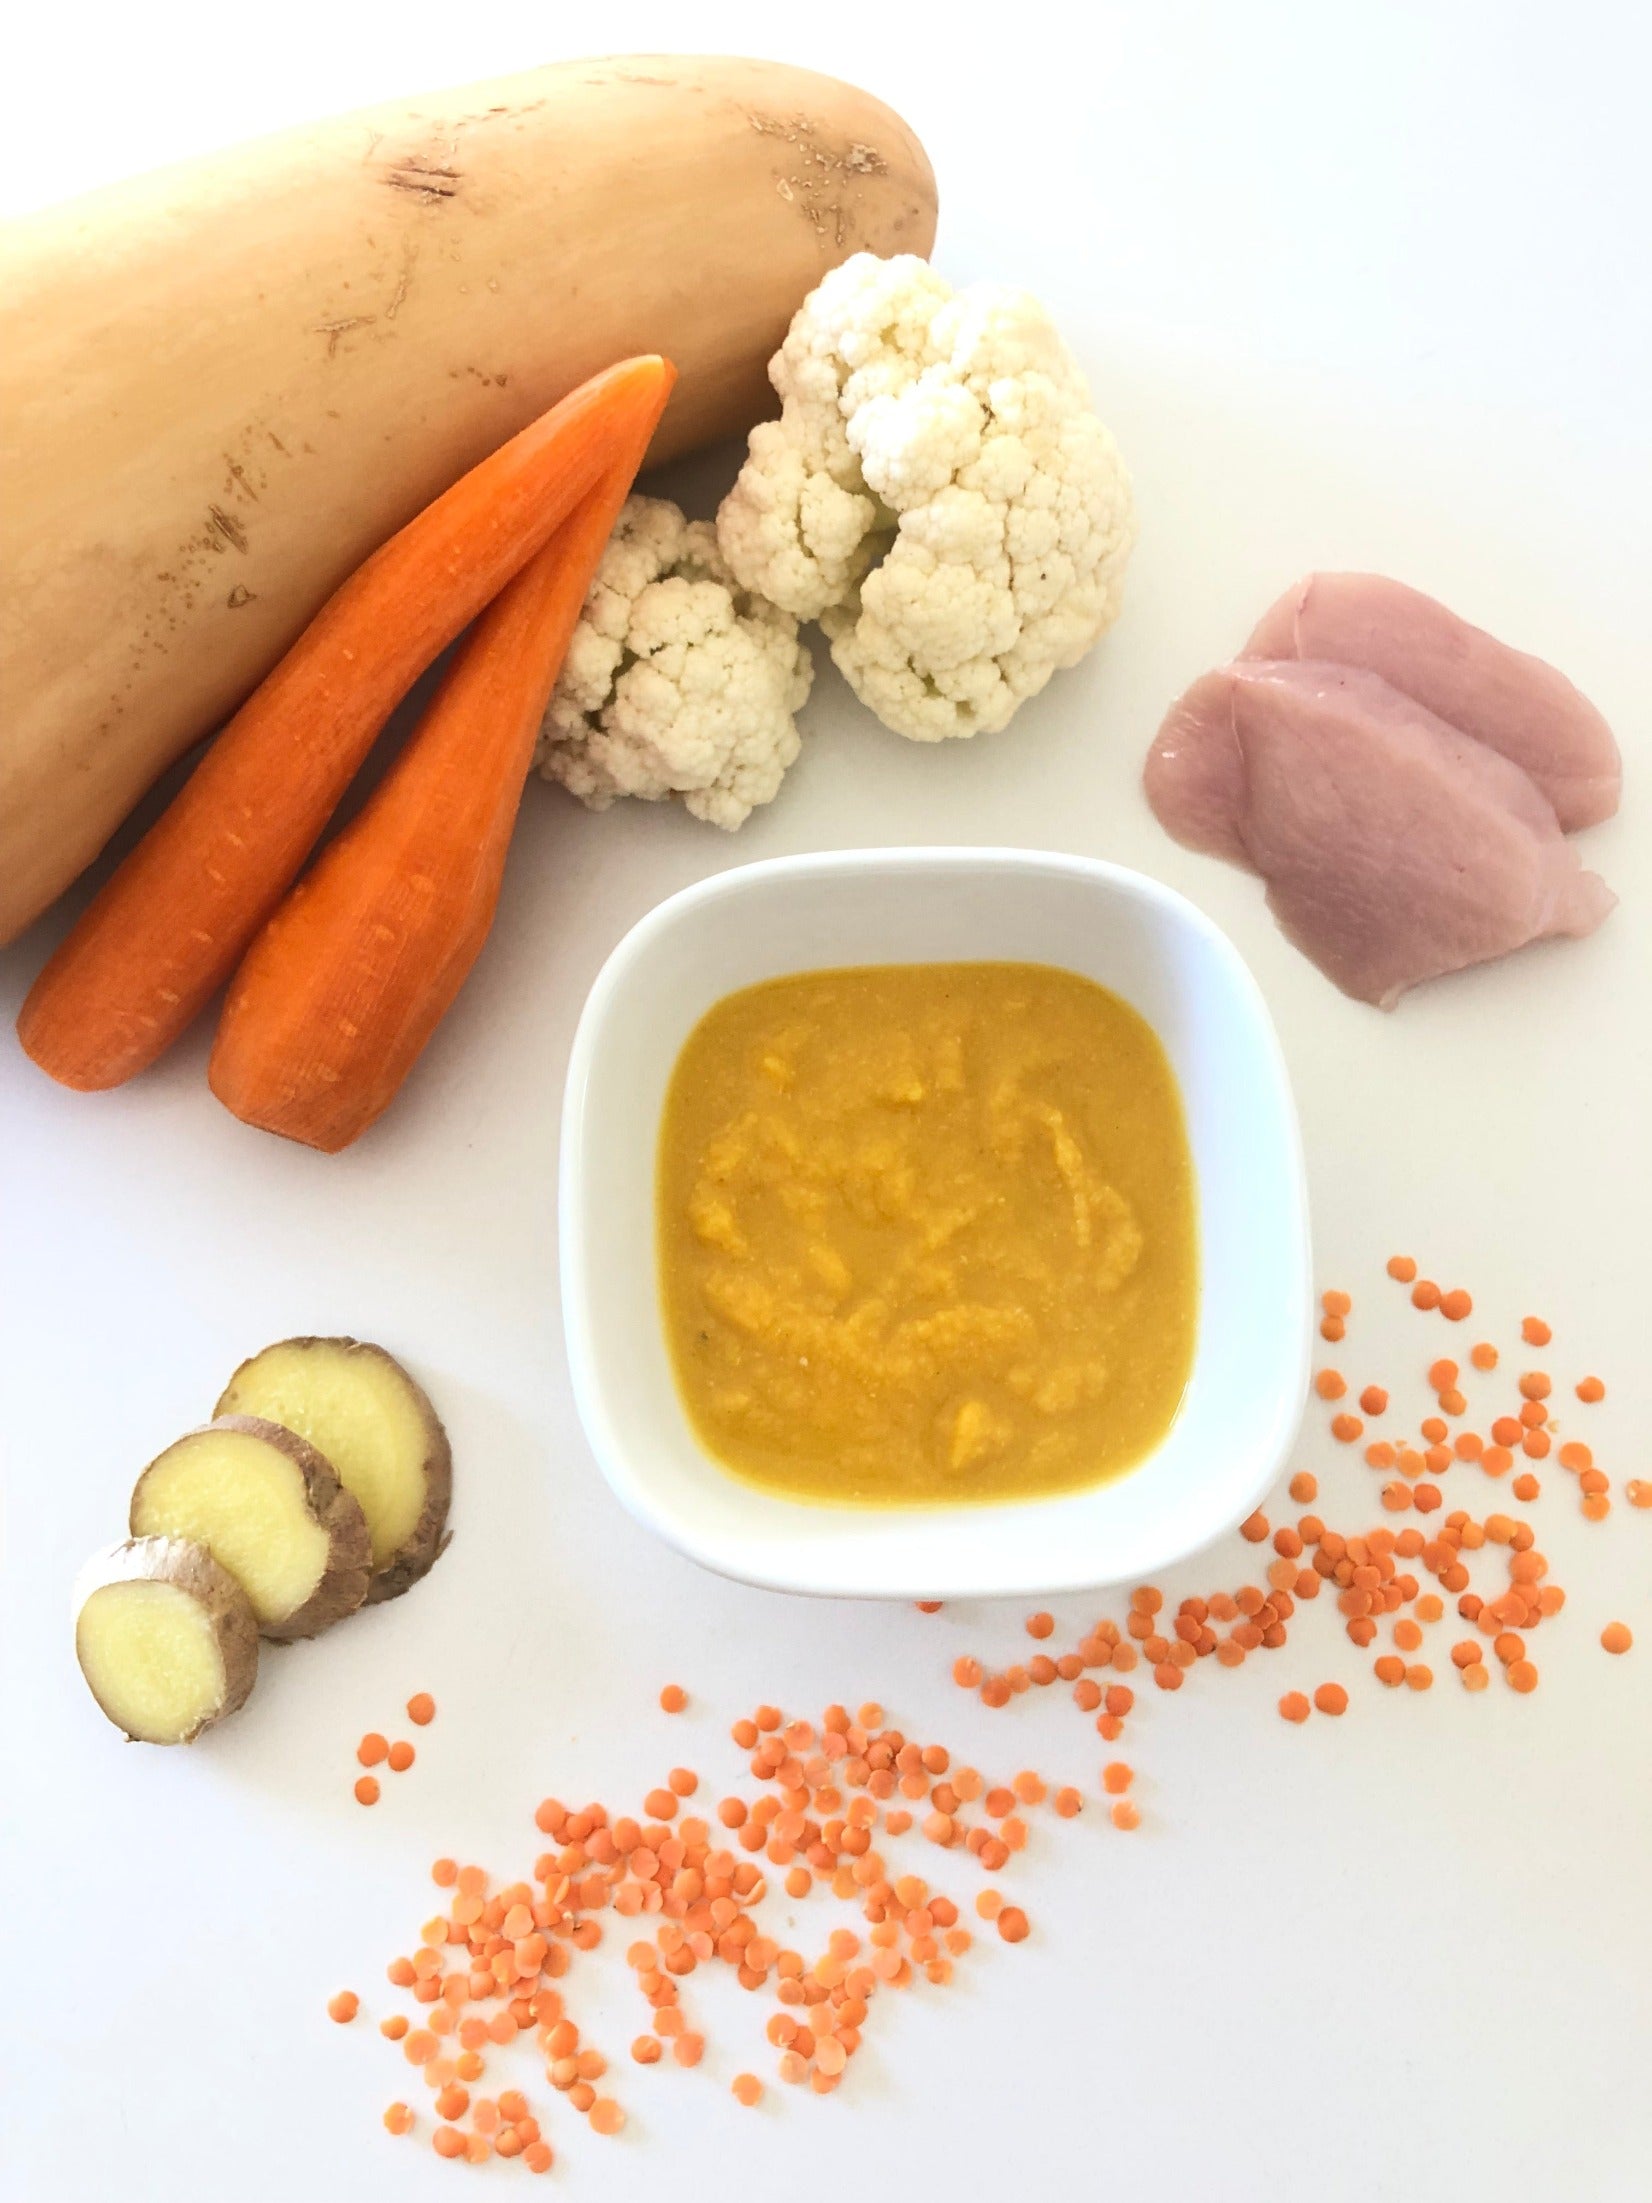 butternut | chicken | carrot | cauliflower | red lentil | ginger